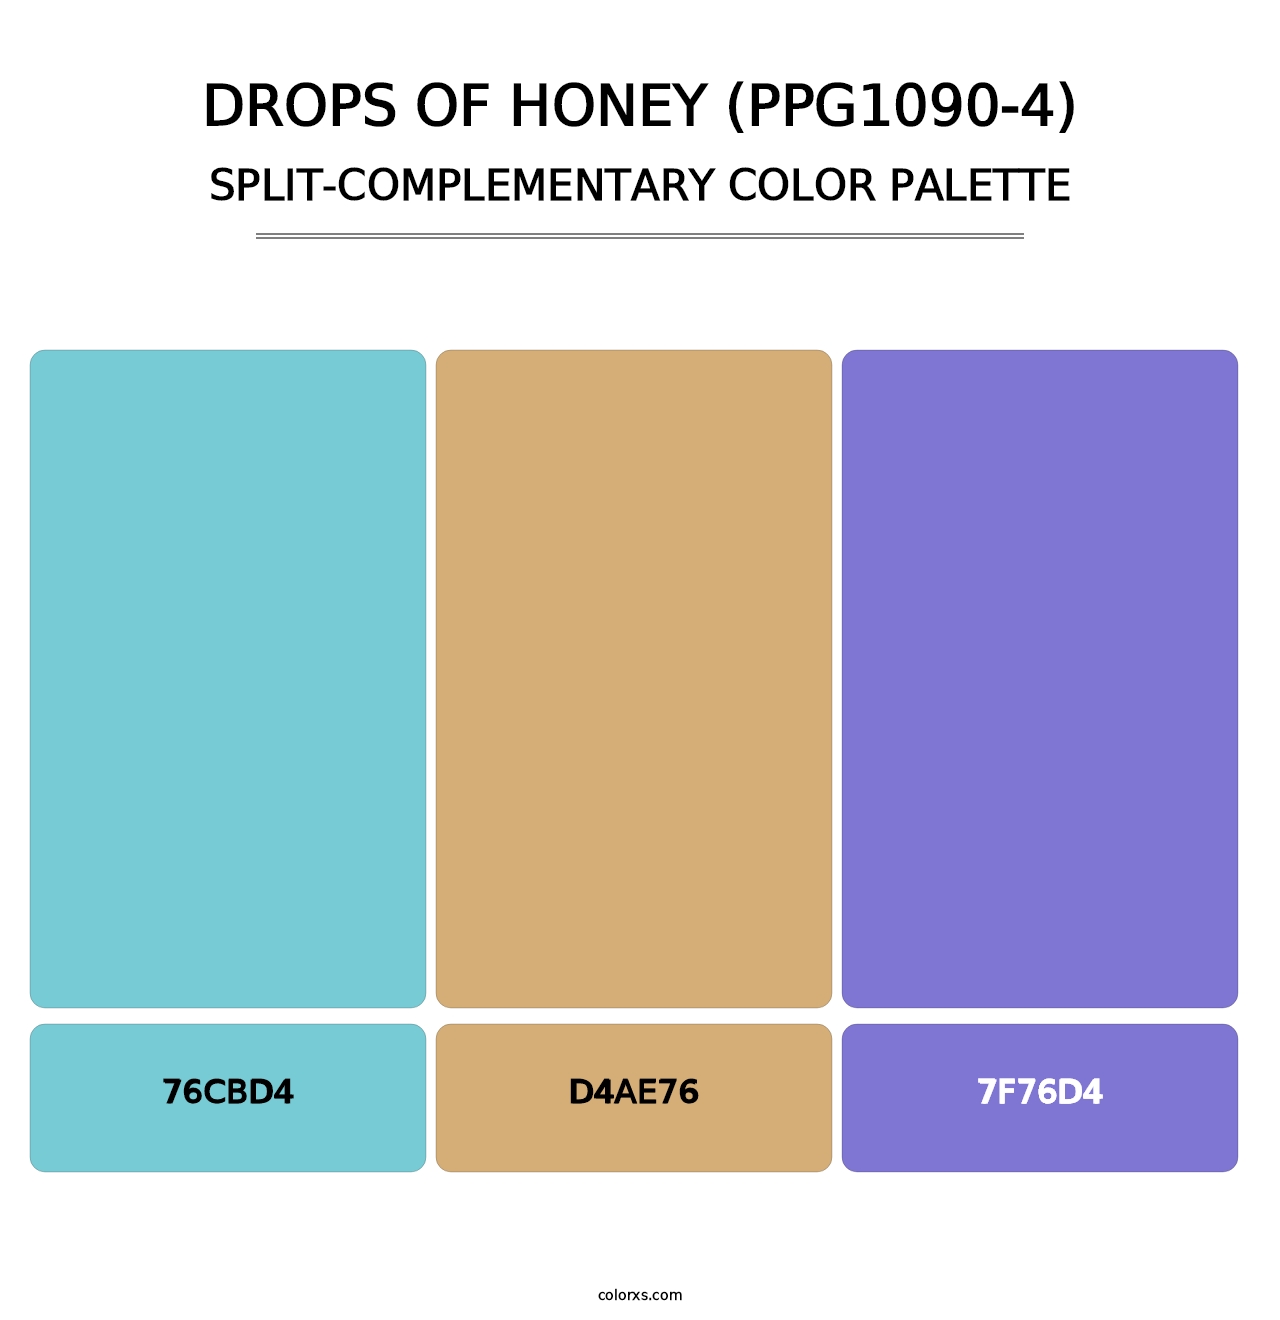 Drops Of Honey (PPG1090-4) - Split-Complementary Color Palette